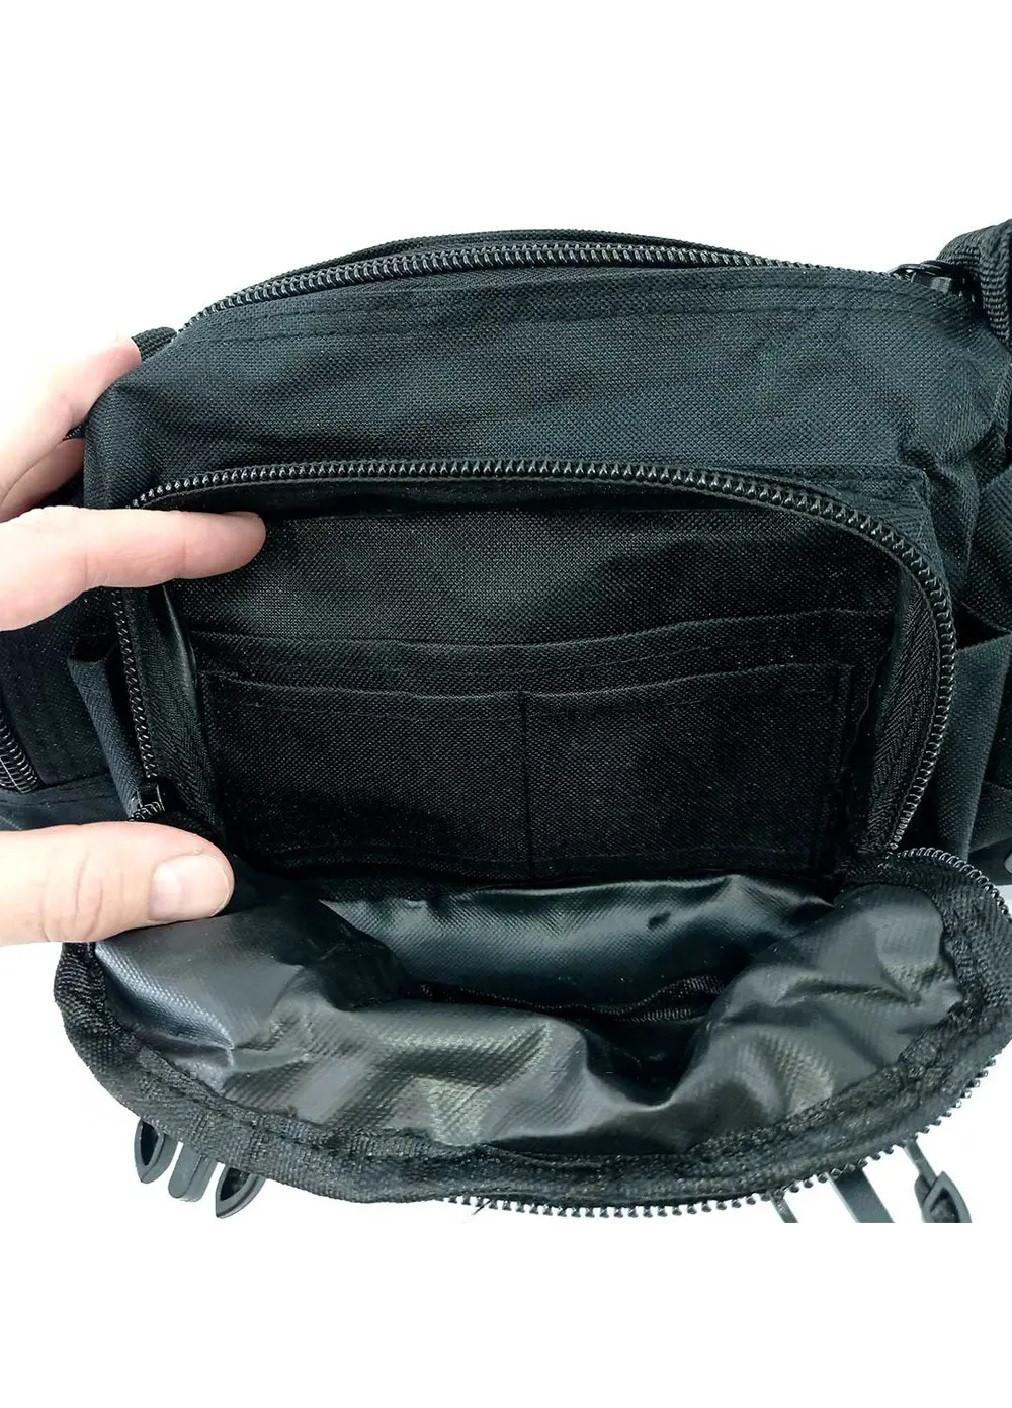 Тактическая сумка через плечо компактная армейская для рыбалки охоты туризма на 5 л 35х14х18 см (474204-Prob) Черная Unbranded (257597019)